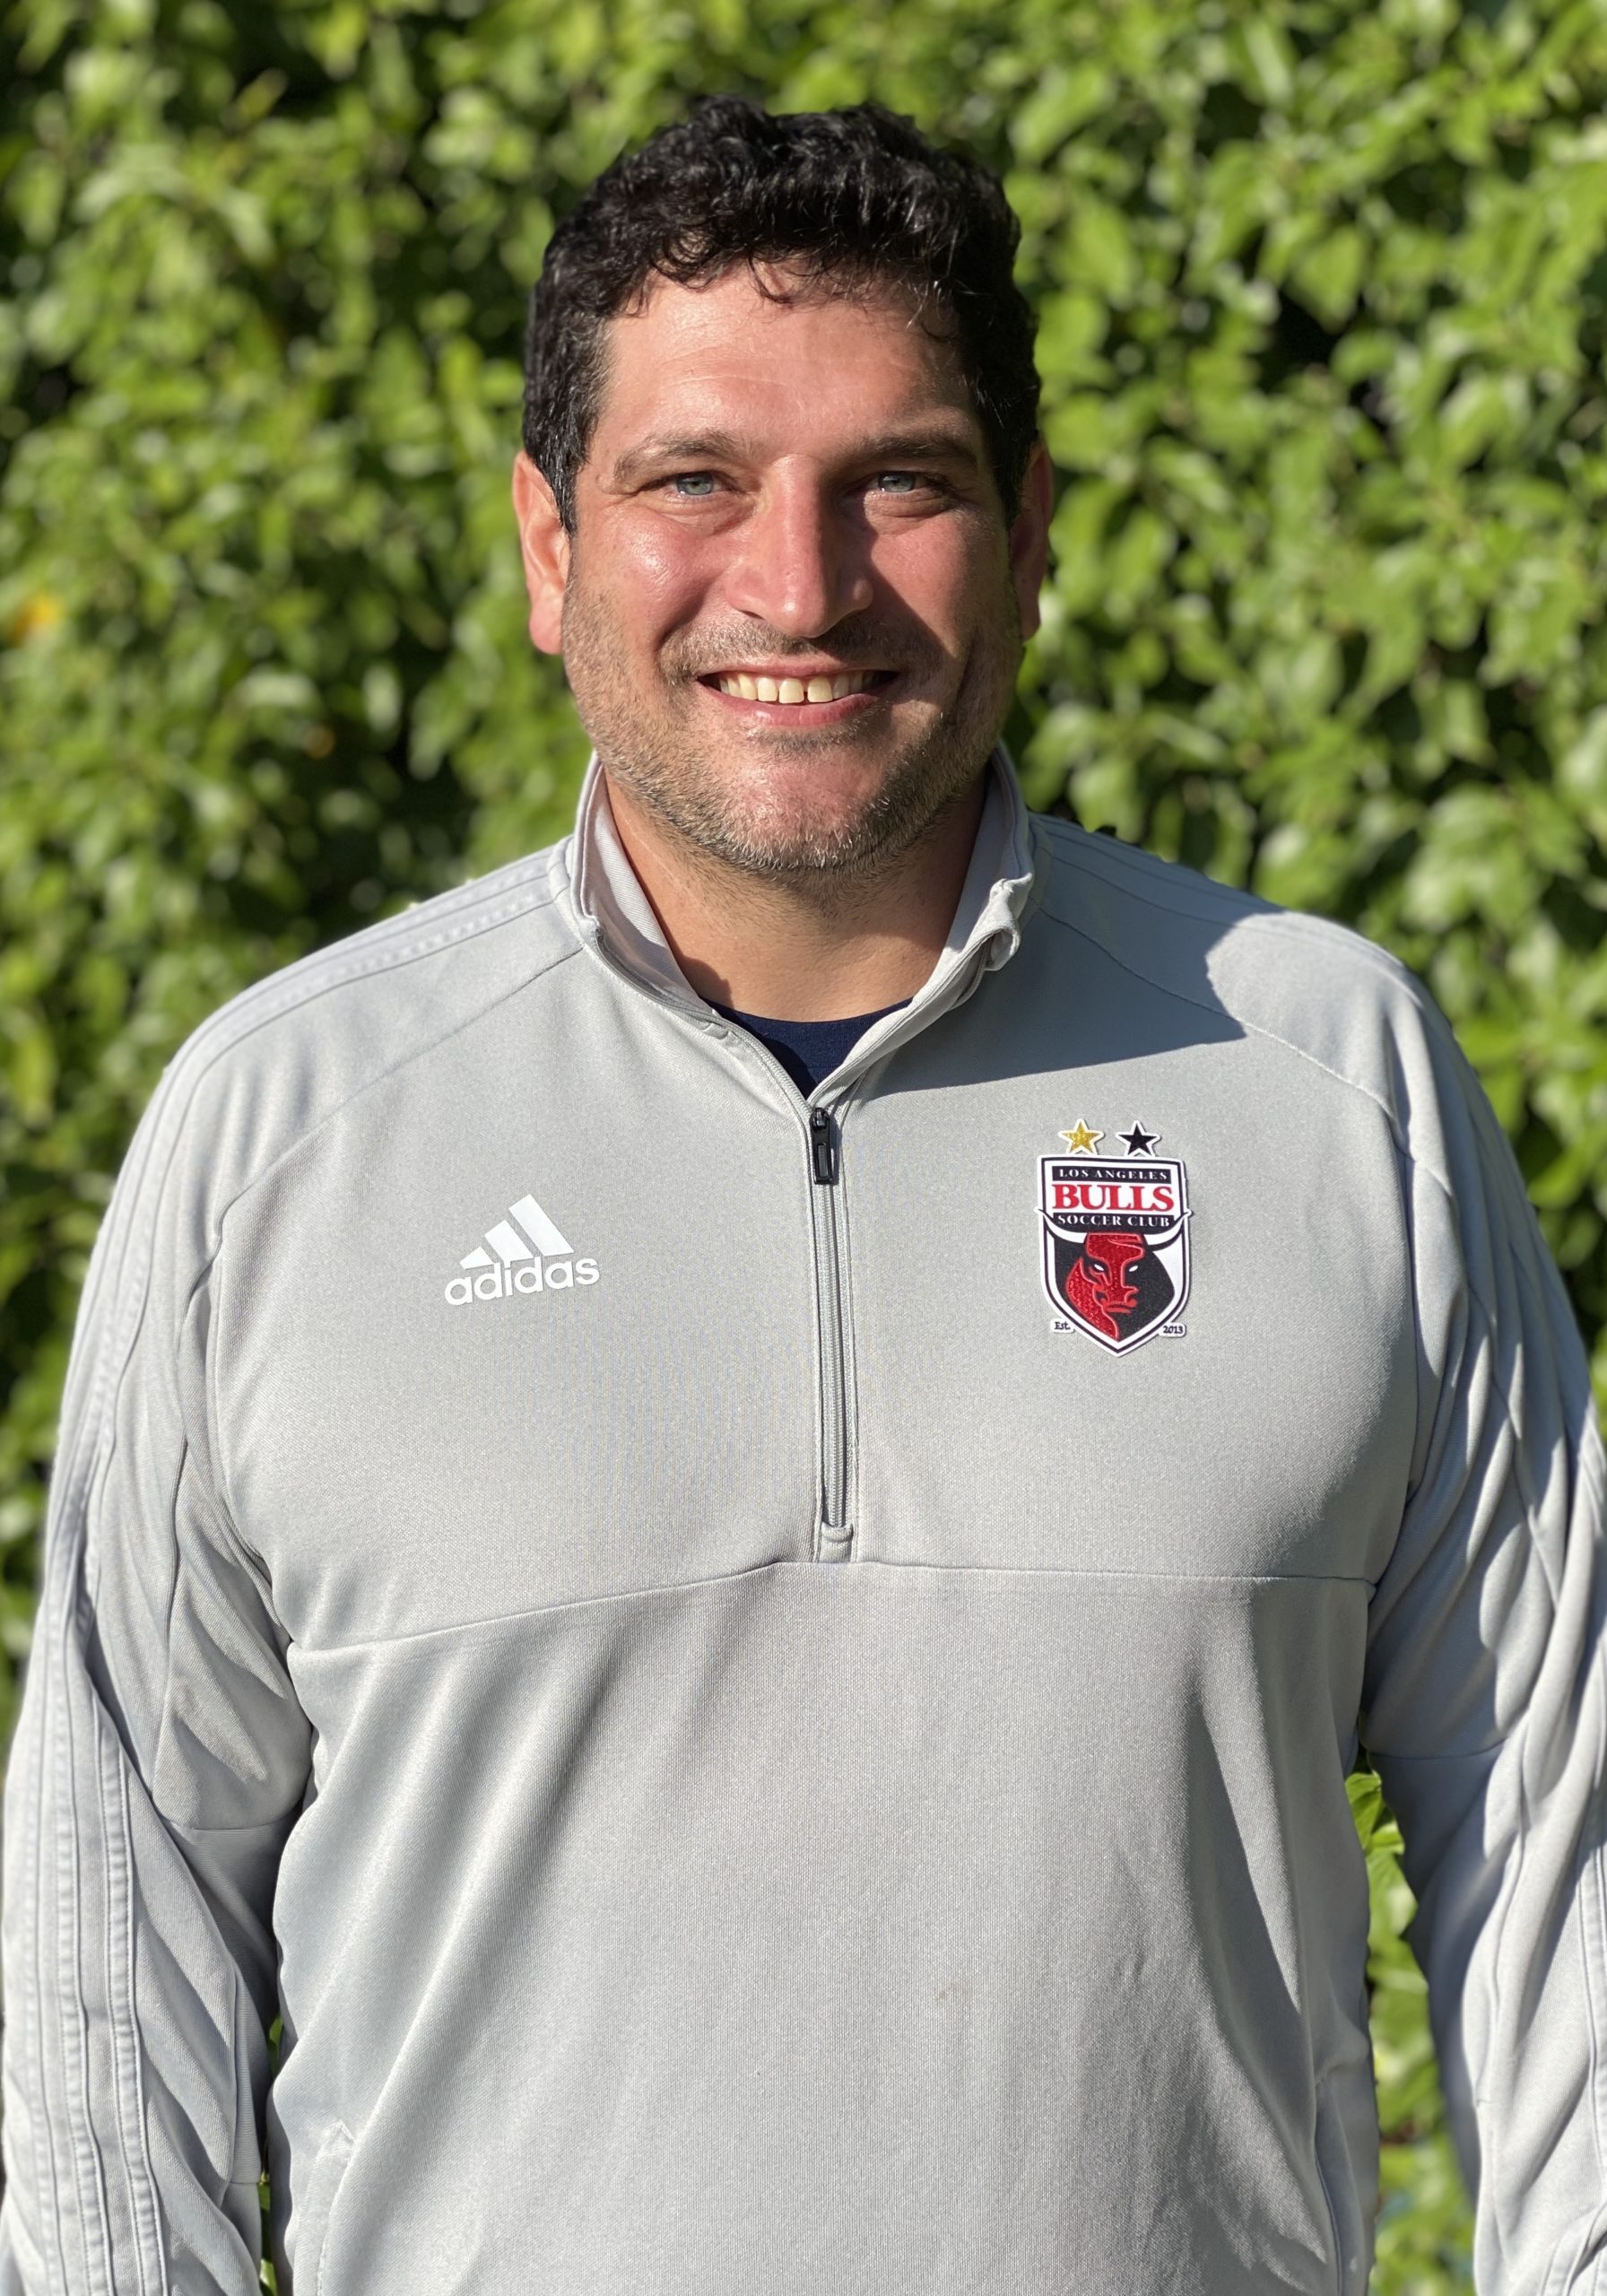 Coach Steve Olivarez